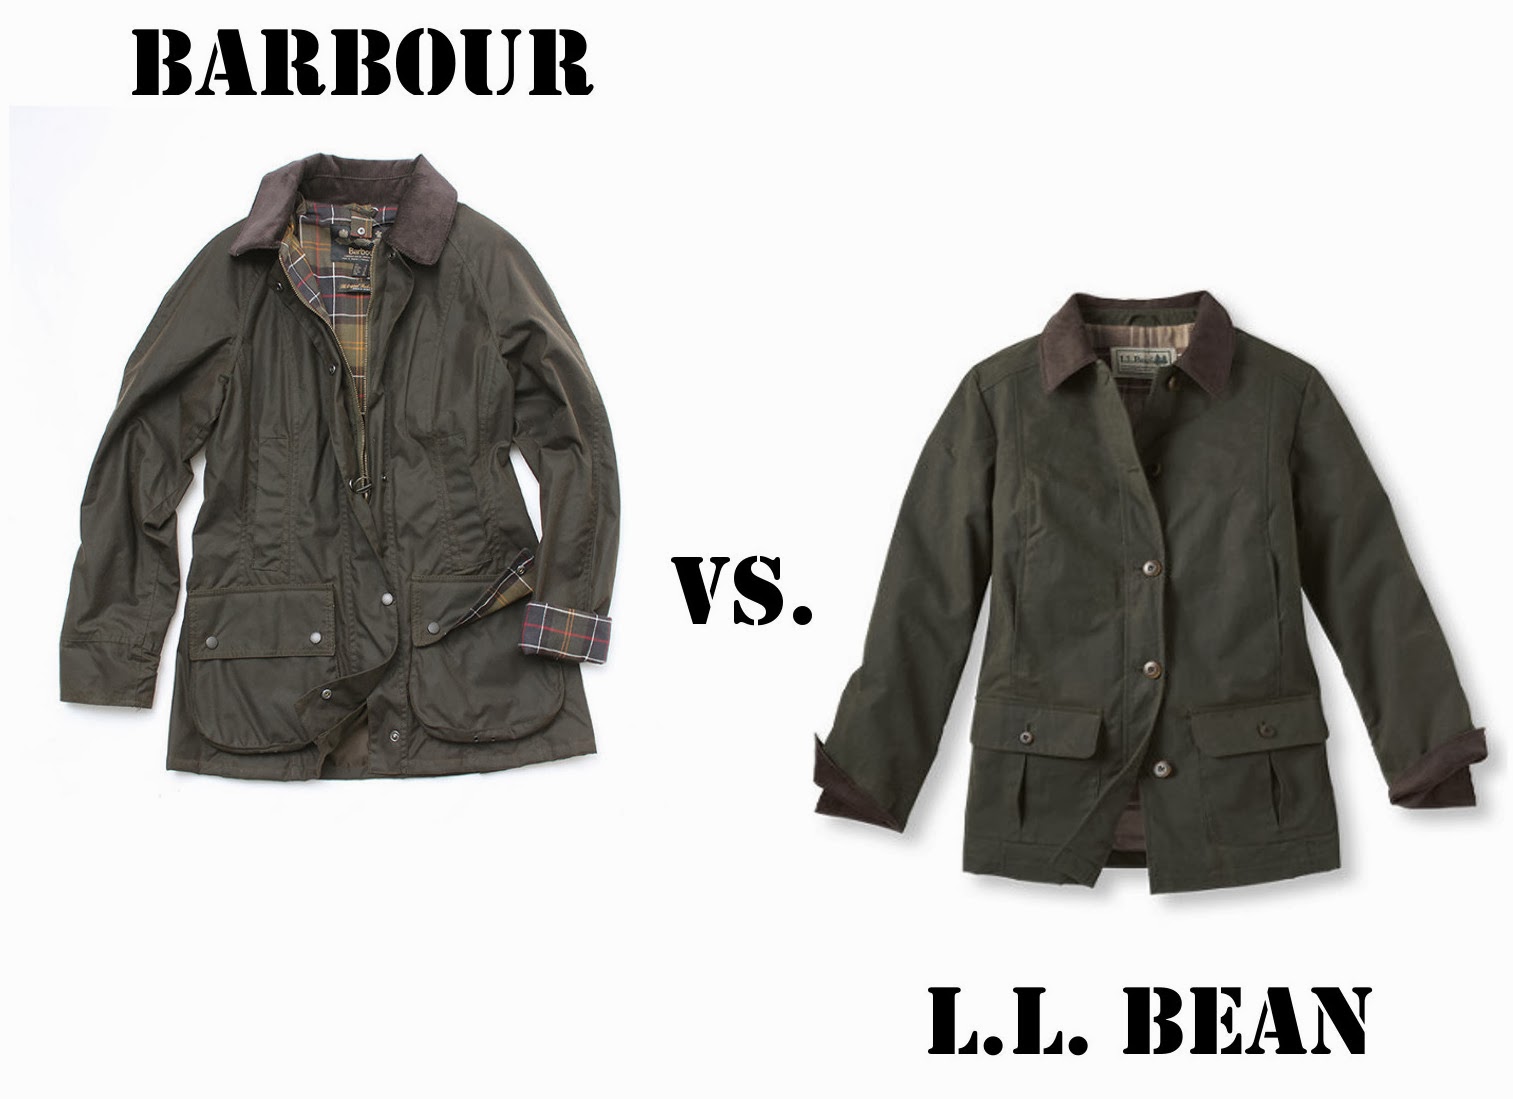 ll bean barbour jacket